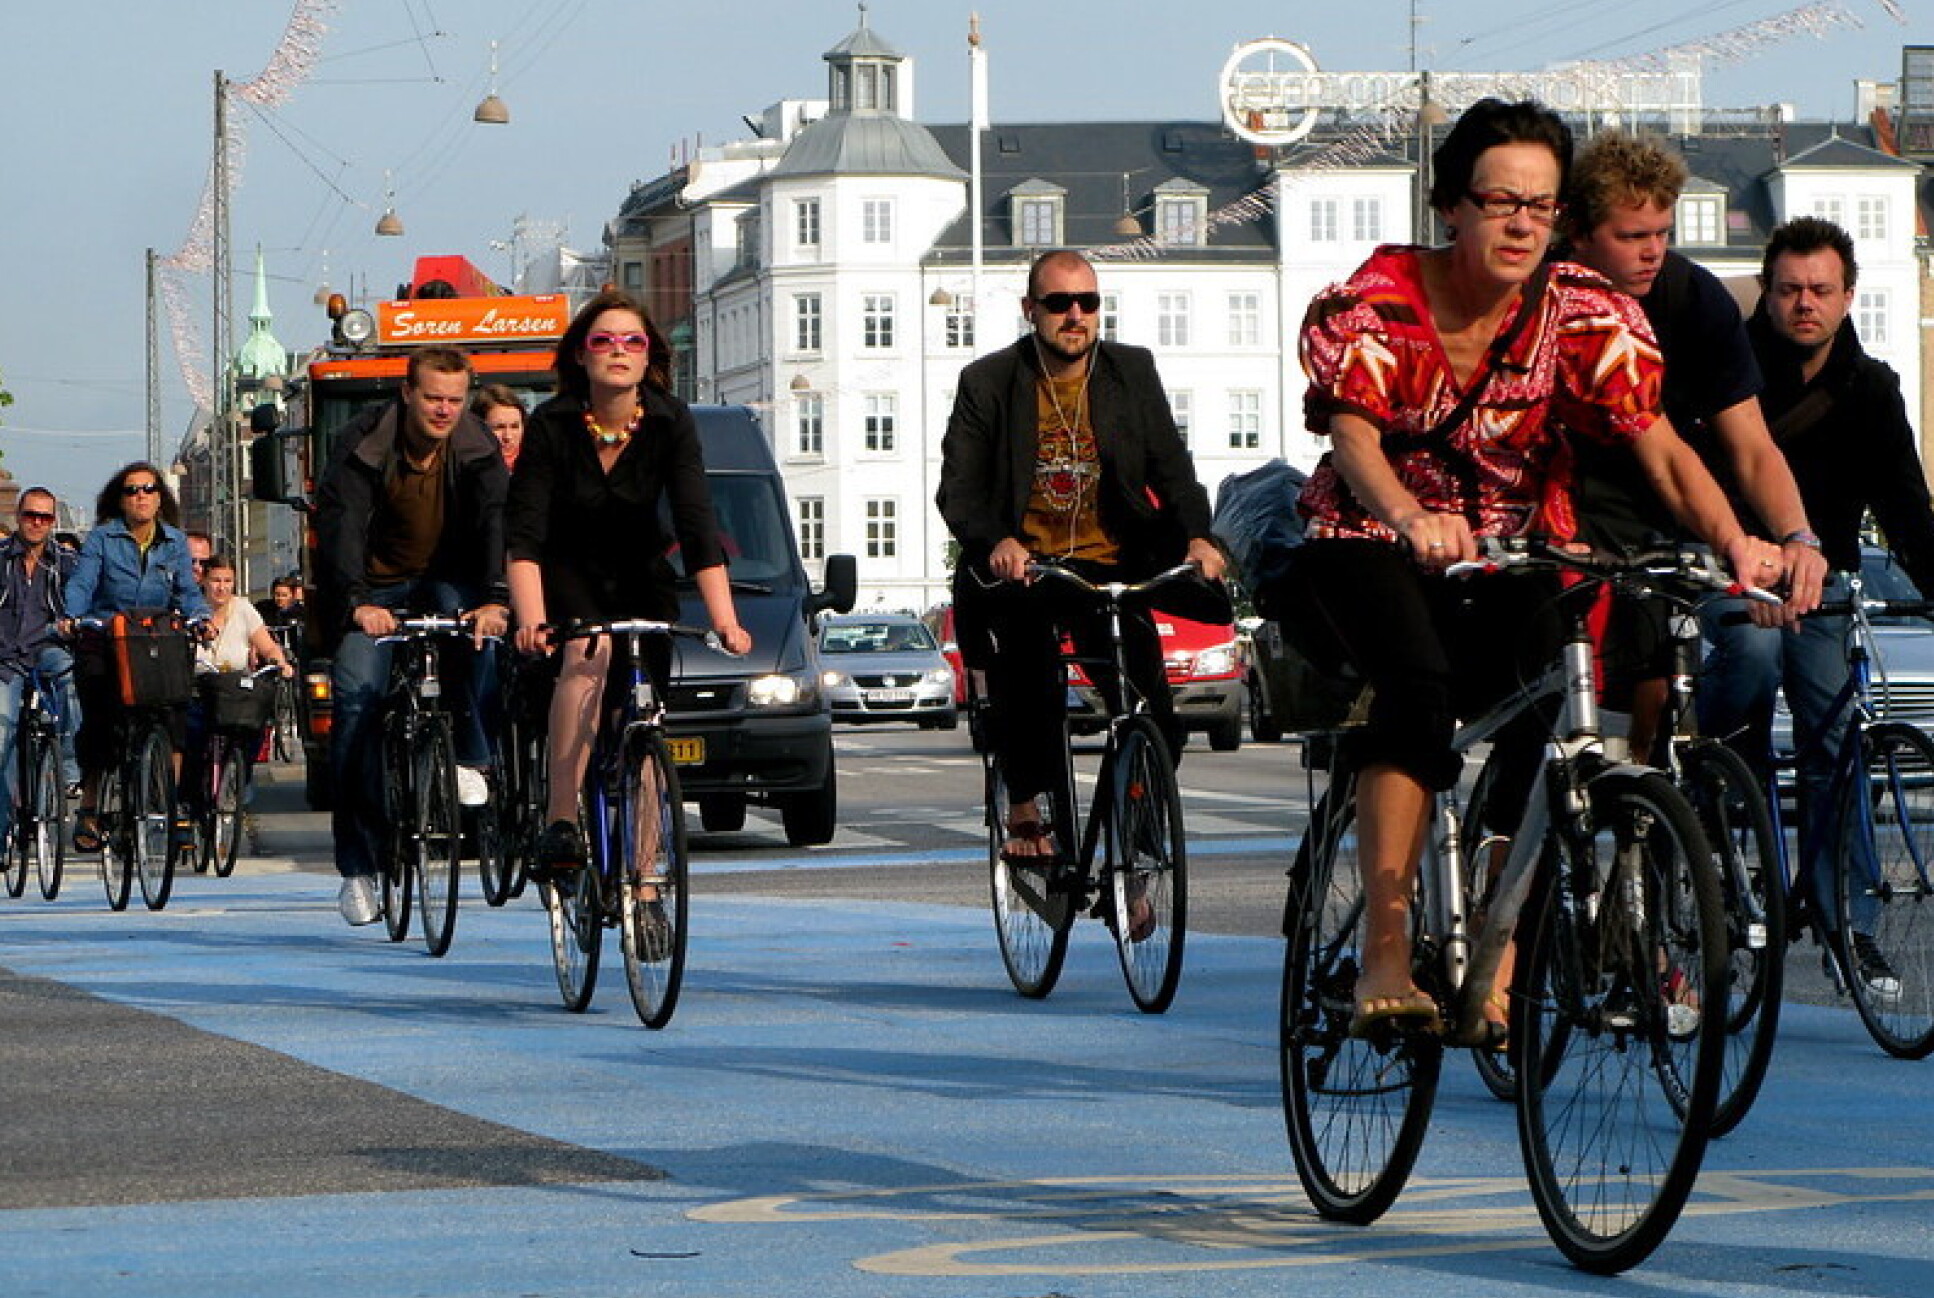 People cycling through a bike lane during rush hour.